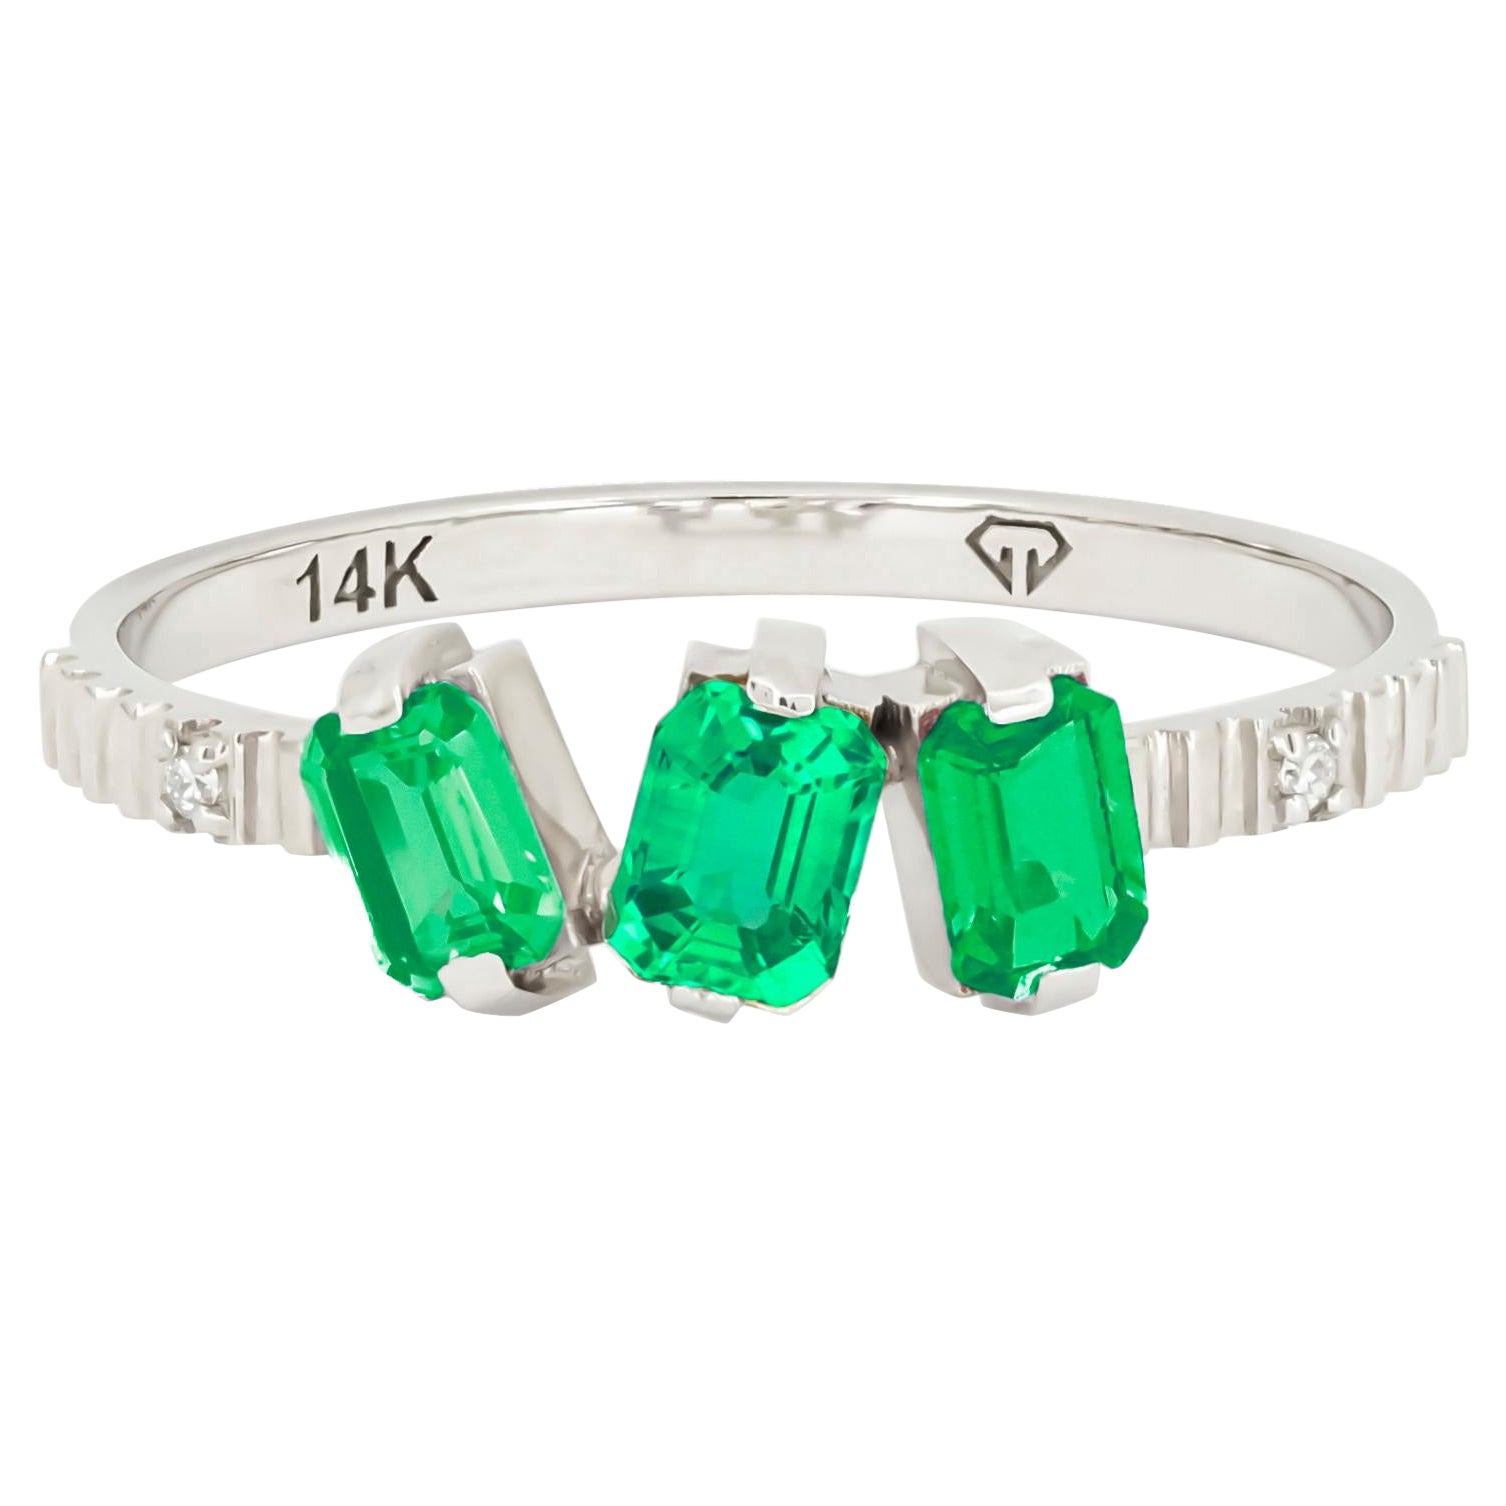 For Sale:  Monochrome green gemstone 14k ring.